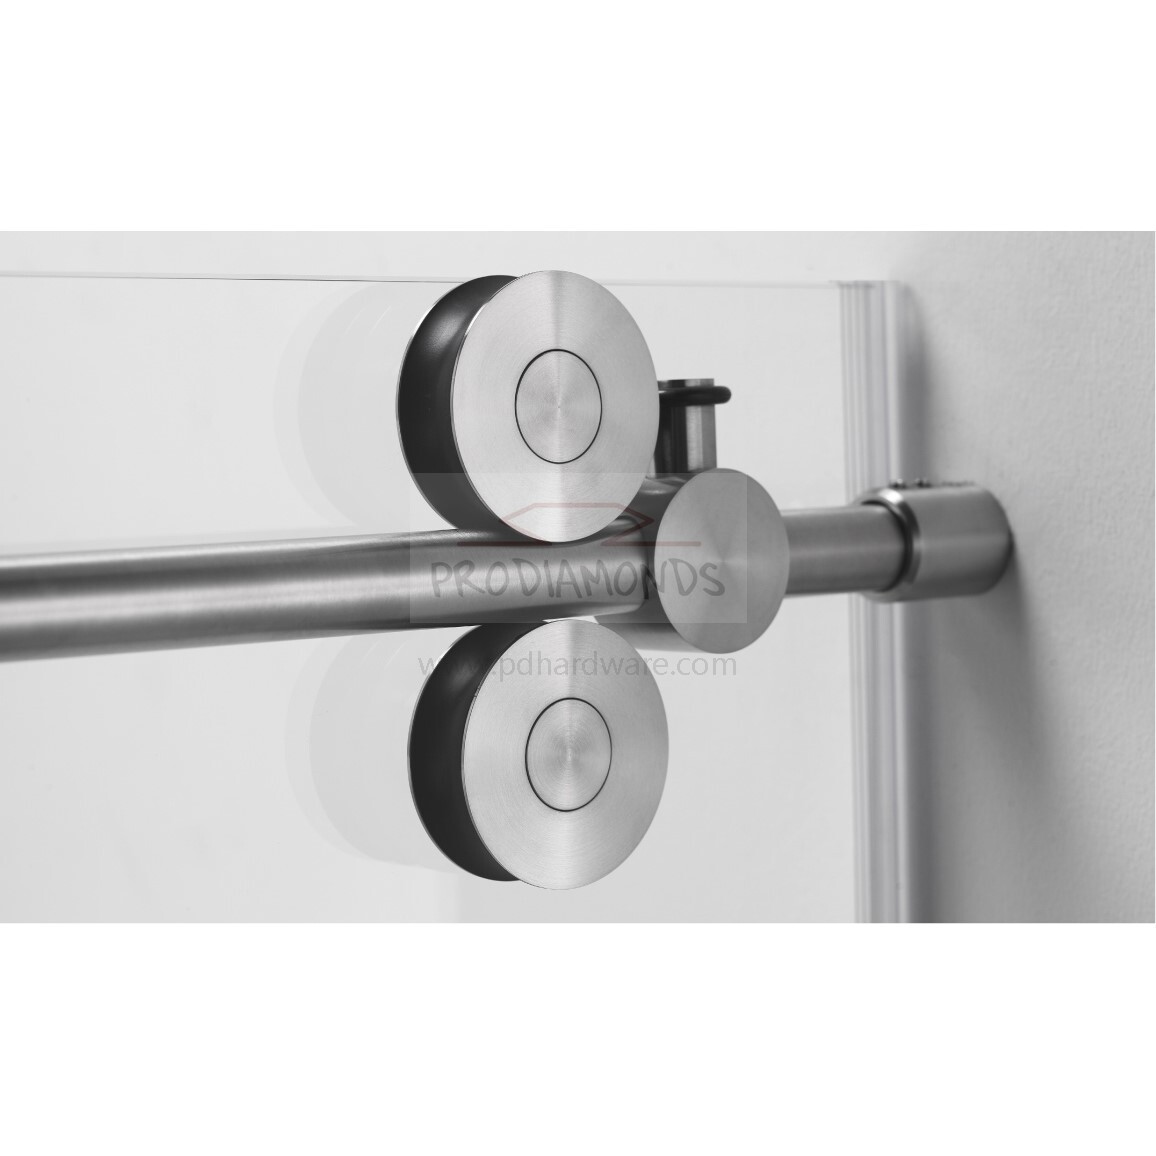 Standard 180-Degree Crescent Series Sliding Shower Door System